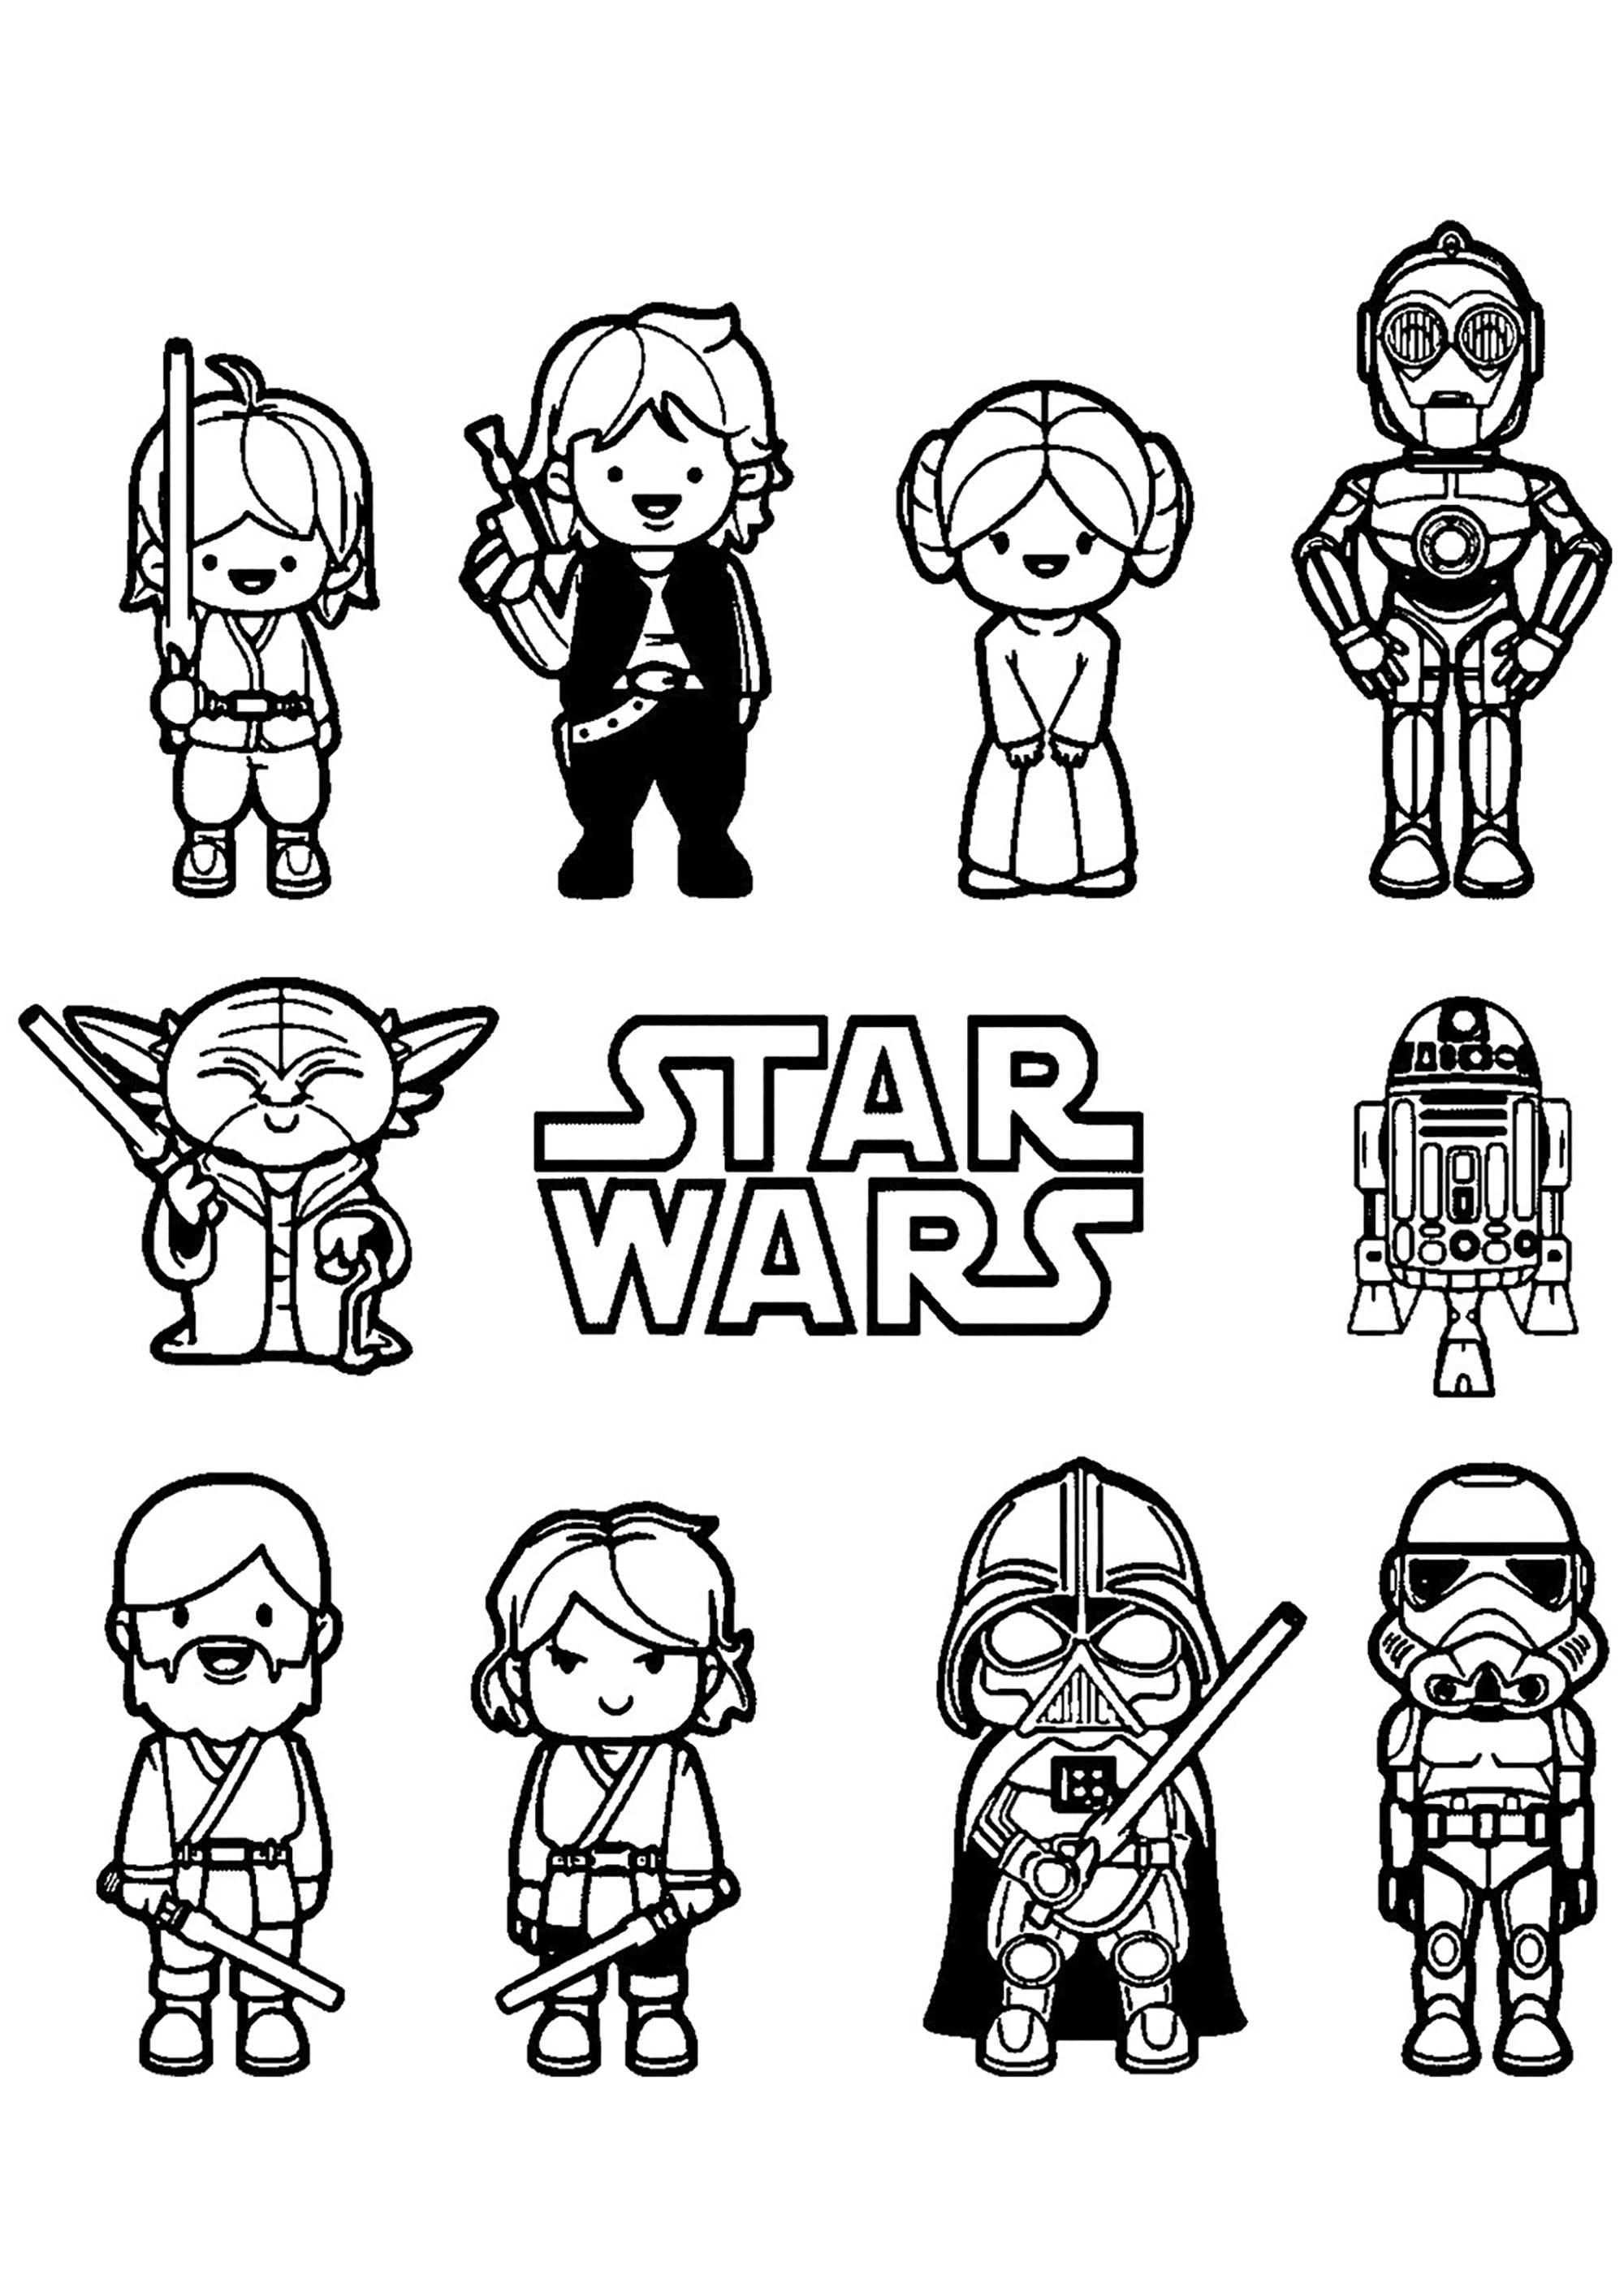 16 Coloring Page Star Wars Star Wars Coloring Book Star Wars Colors Star Wars Coloring Sheet